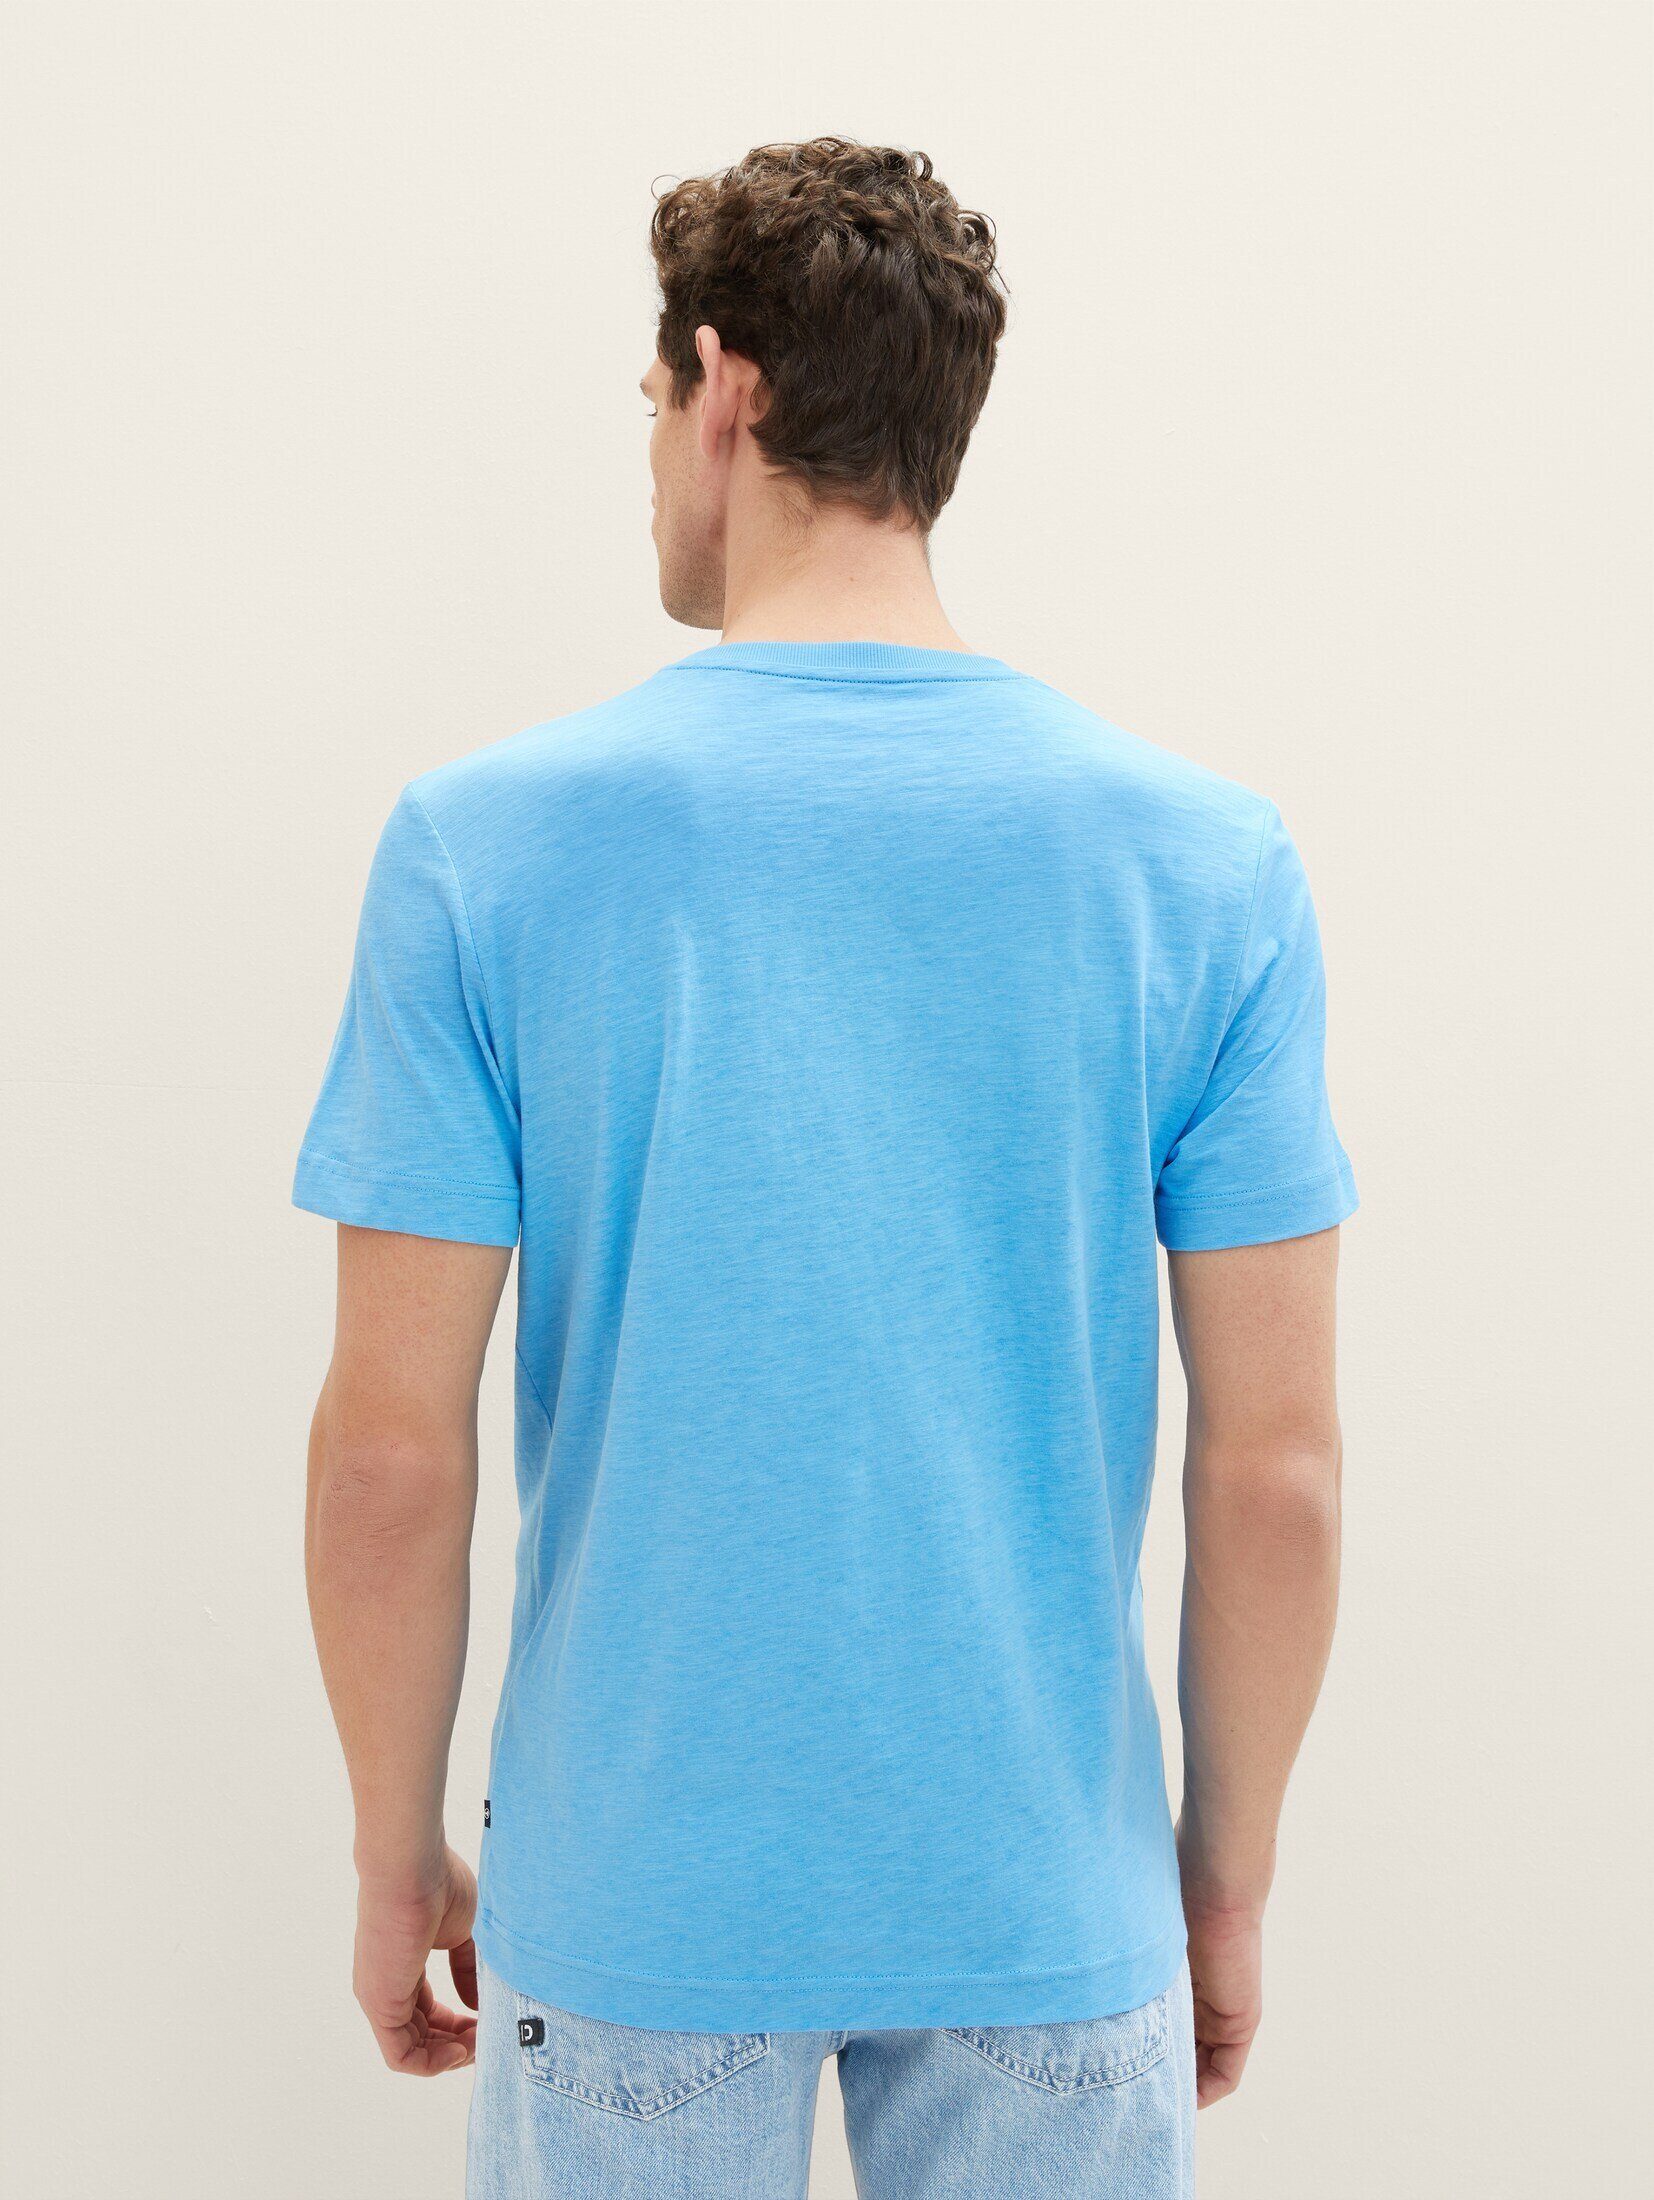 mit Print TAILOR T-Shirt blue sky TOM T-Shirt rainy